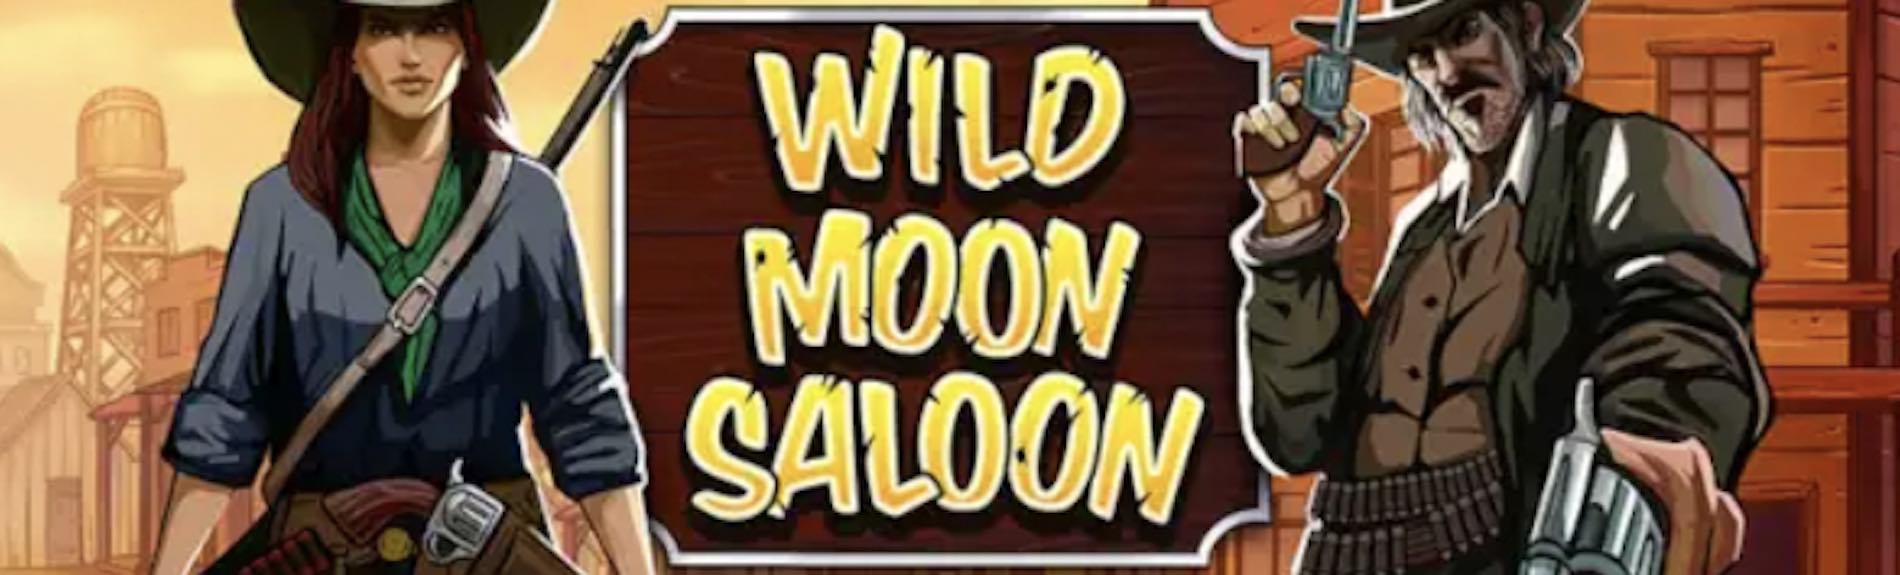 Wild Moon Saloon Slot Release